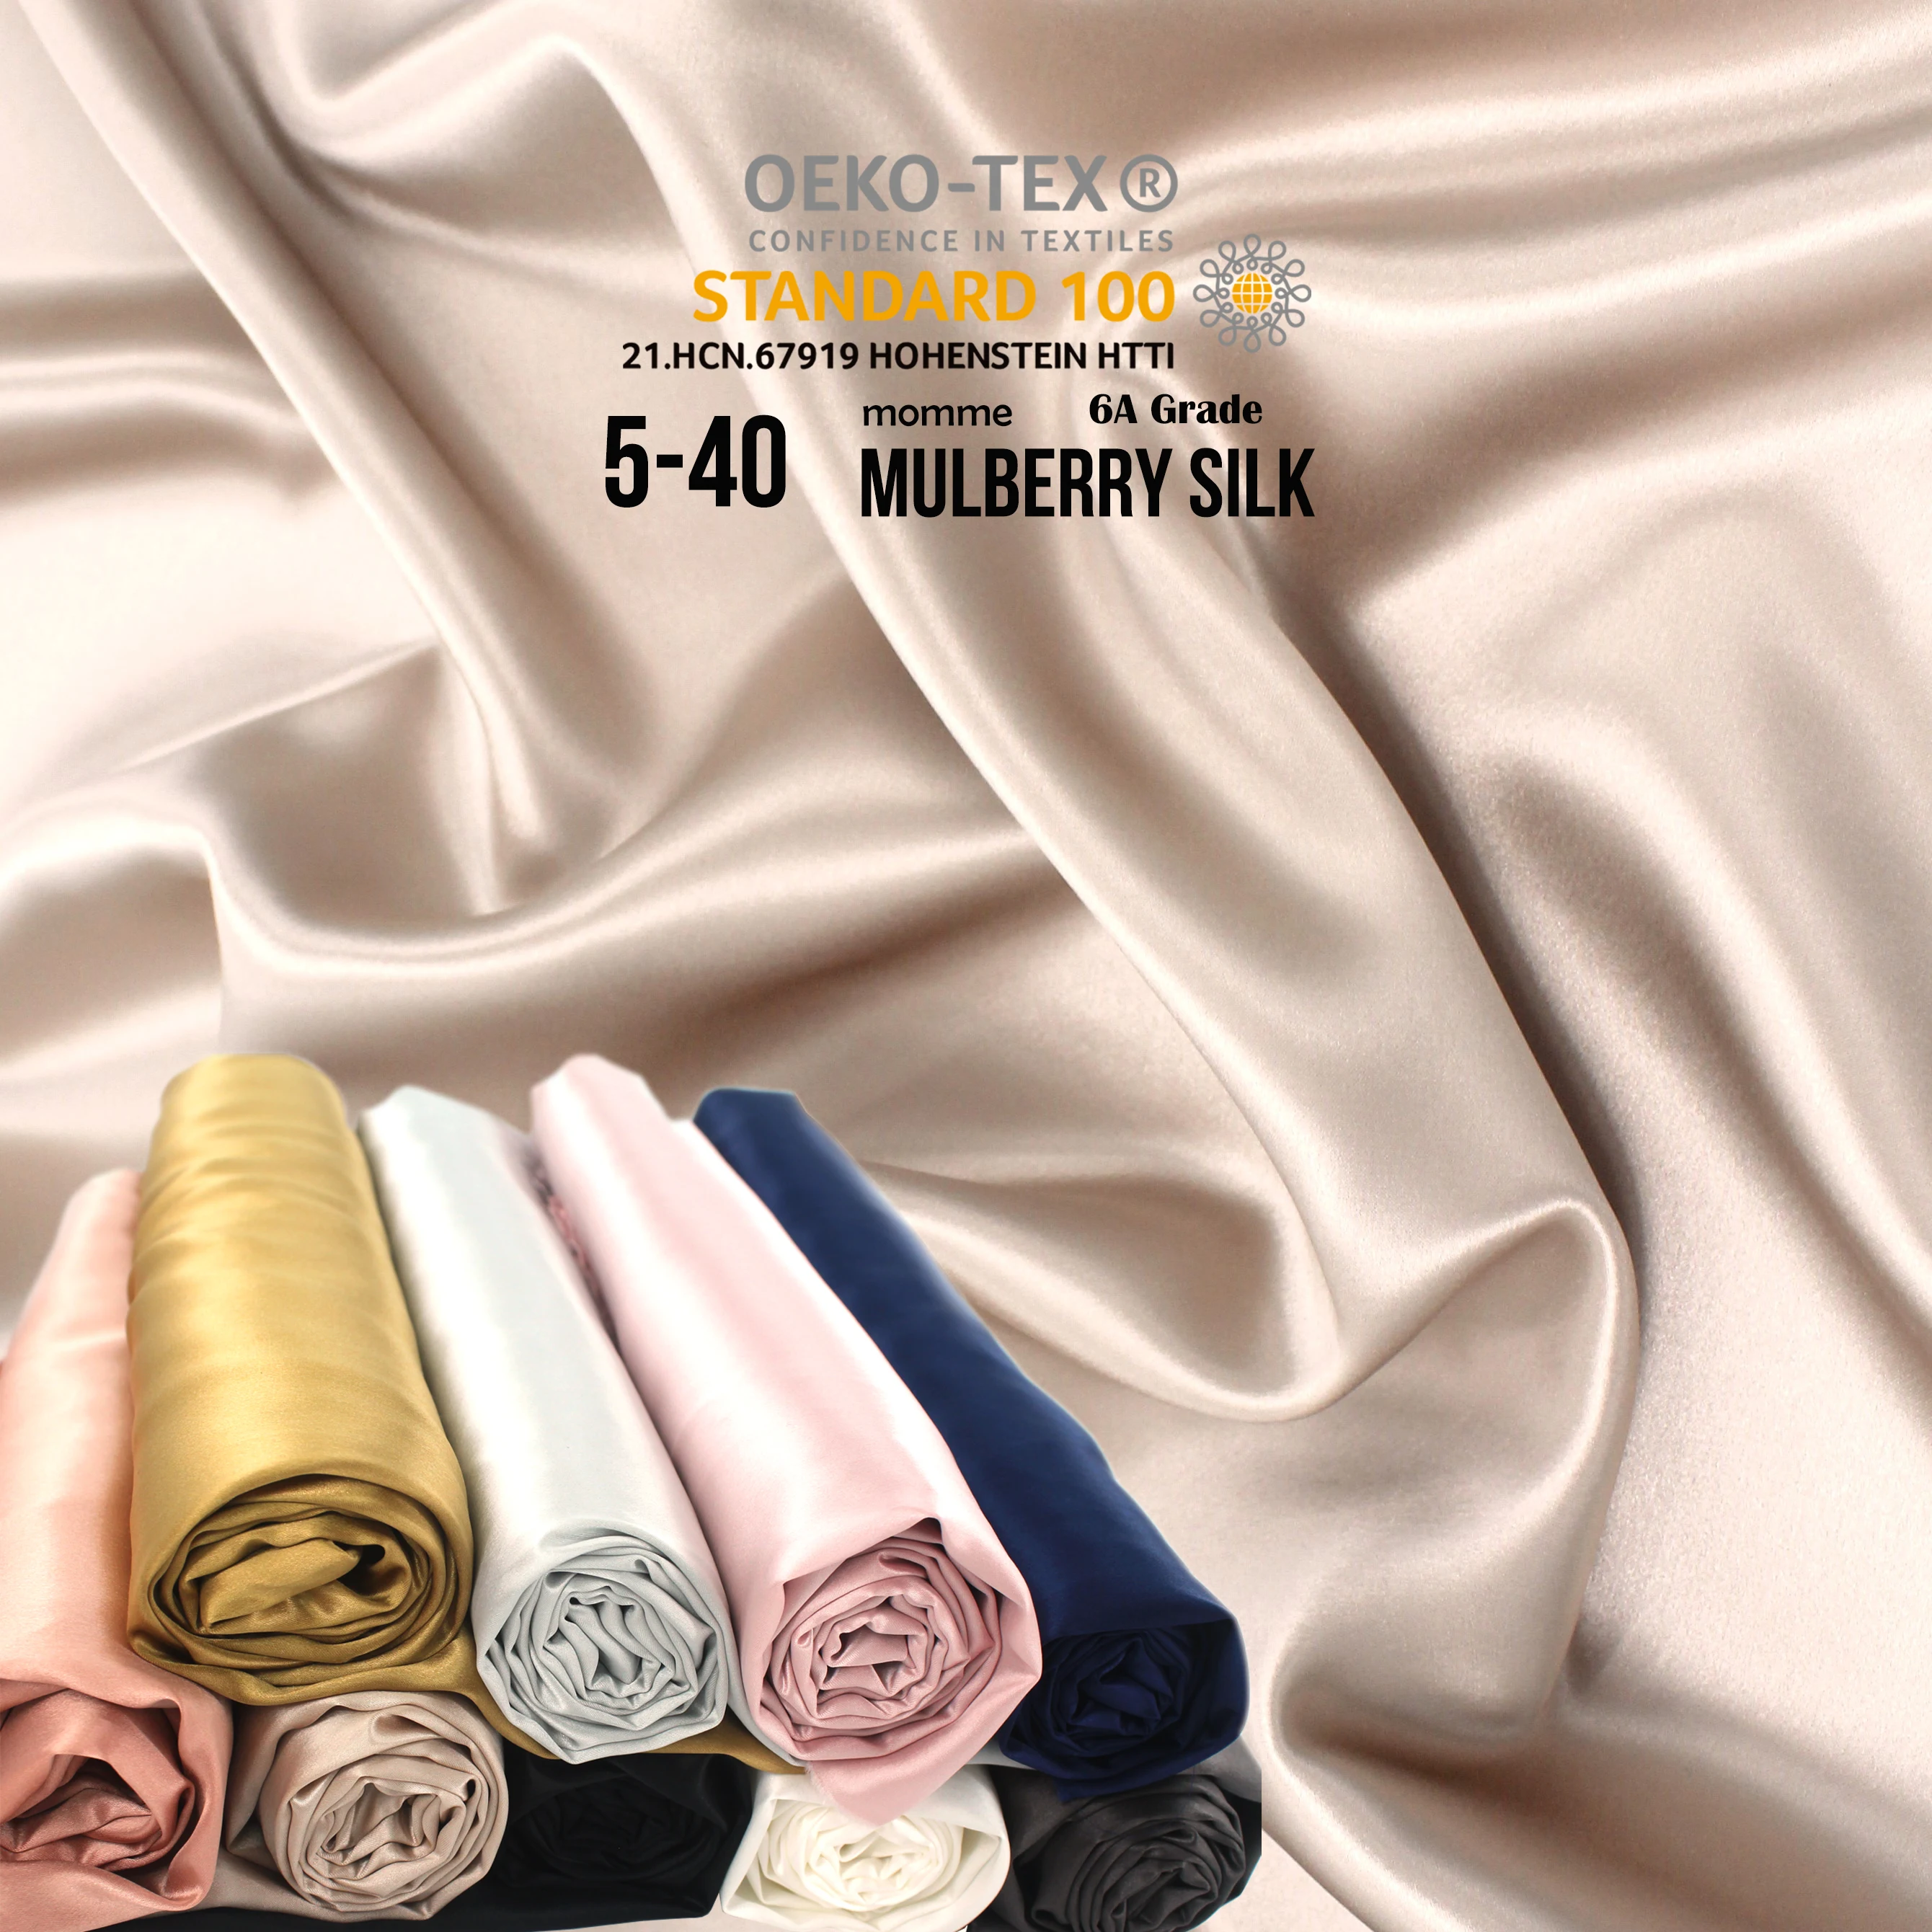 Wholesale High Quality 100% Pure Silk Fabric - China Silk Fabric and Pure  Mulberry Silk Fabric 16/19/22/25mm price